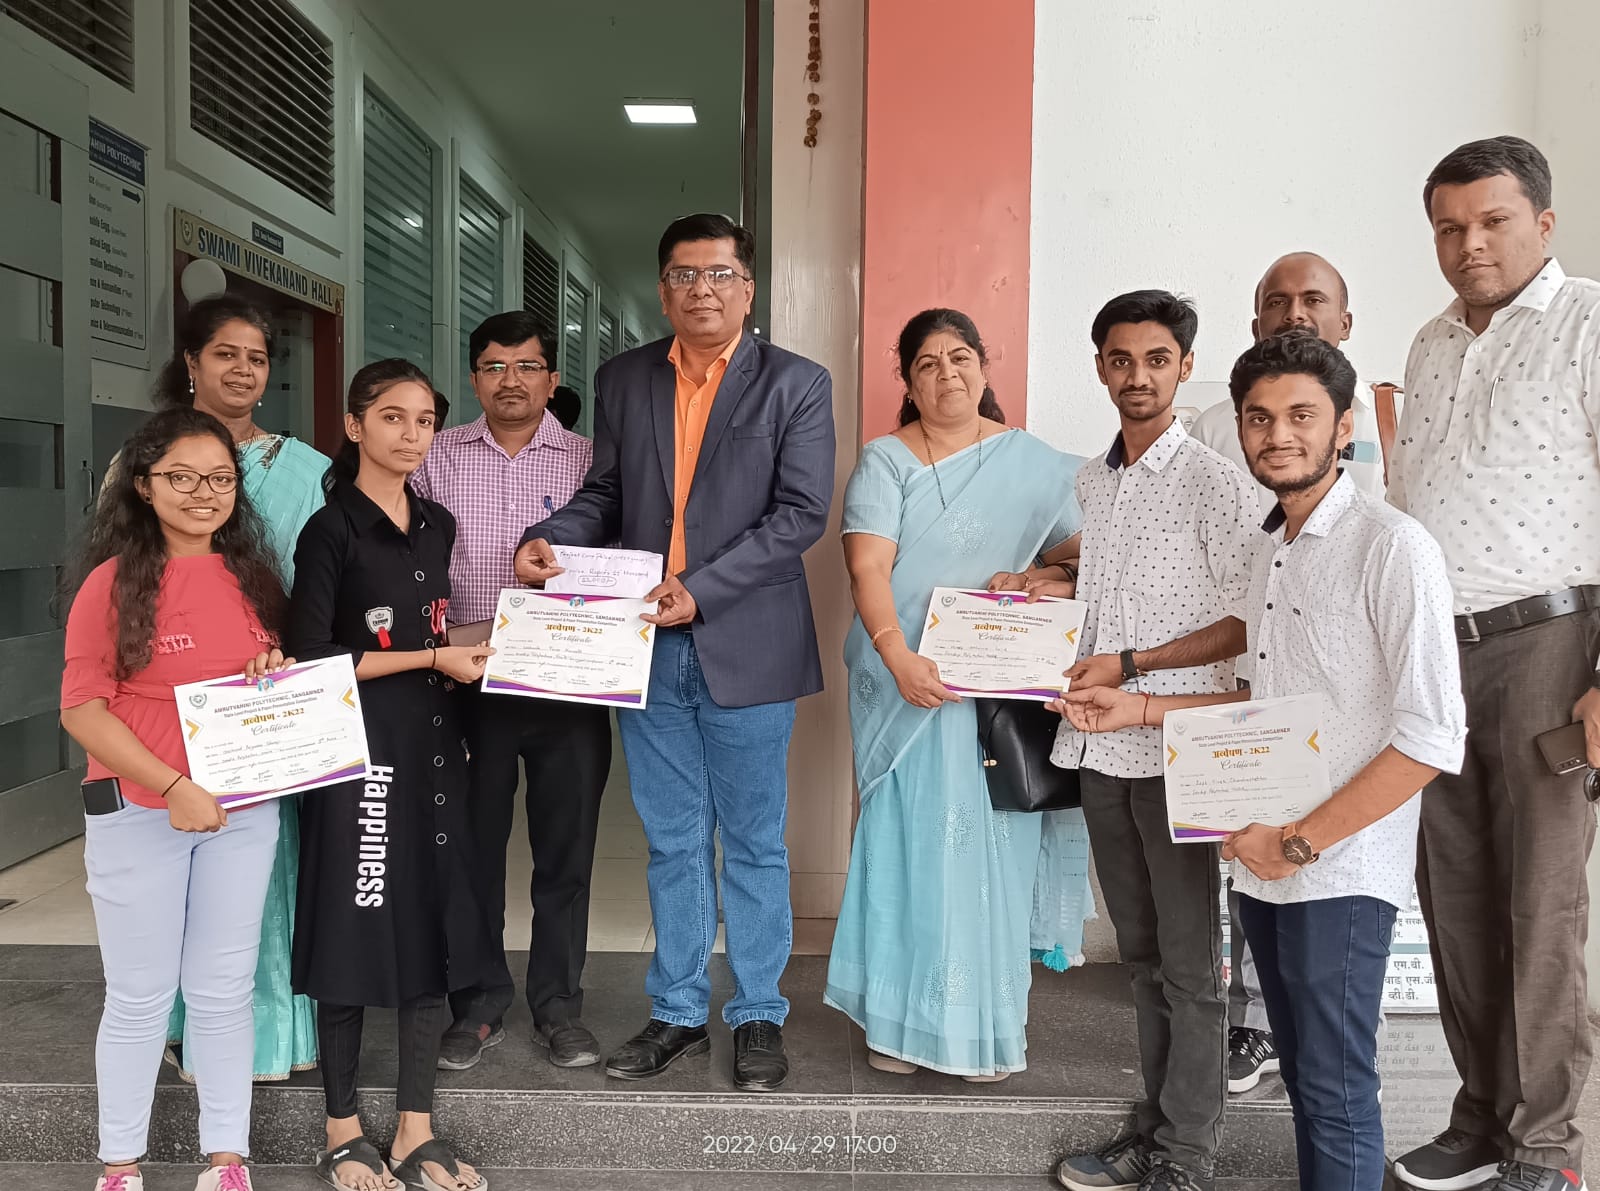 Achievements of Sandip Polytechnic’s Civil Engineering Department students